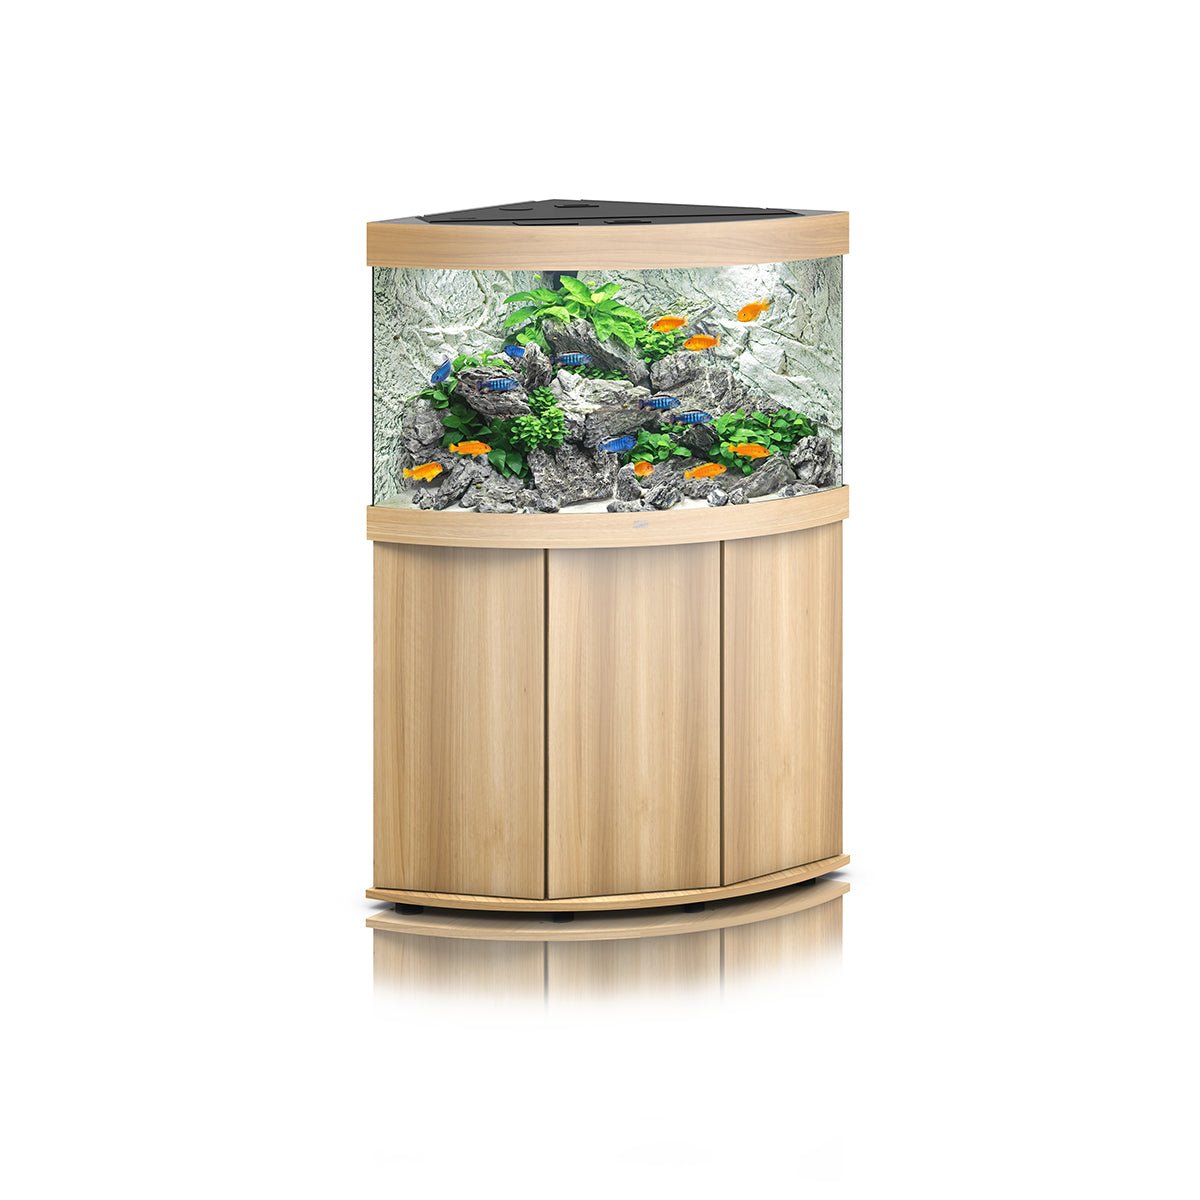 Juwel Trigon 190 LED Aquarium and Cabinet (Light Wood) - Charterhouse Aquatics